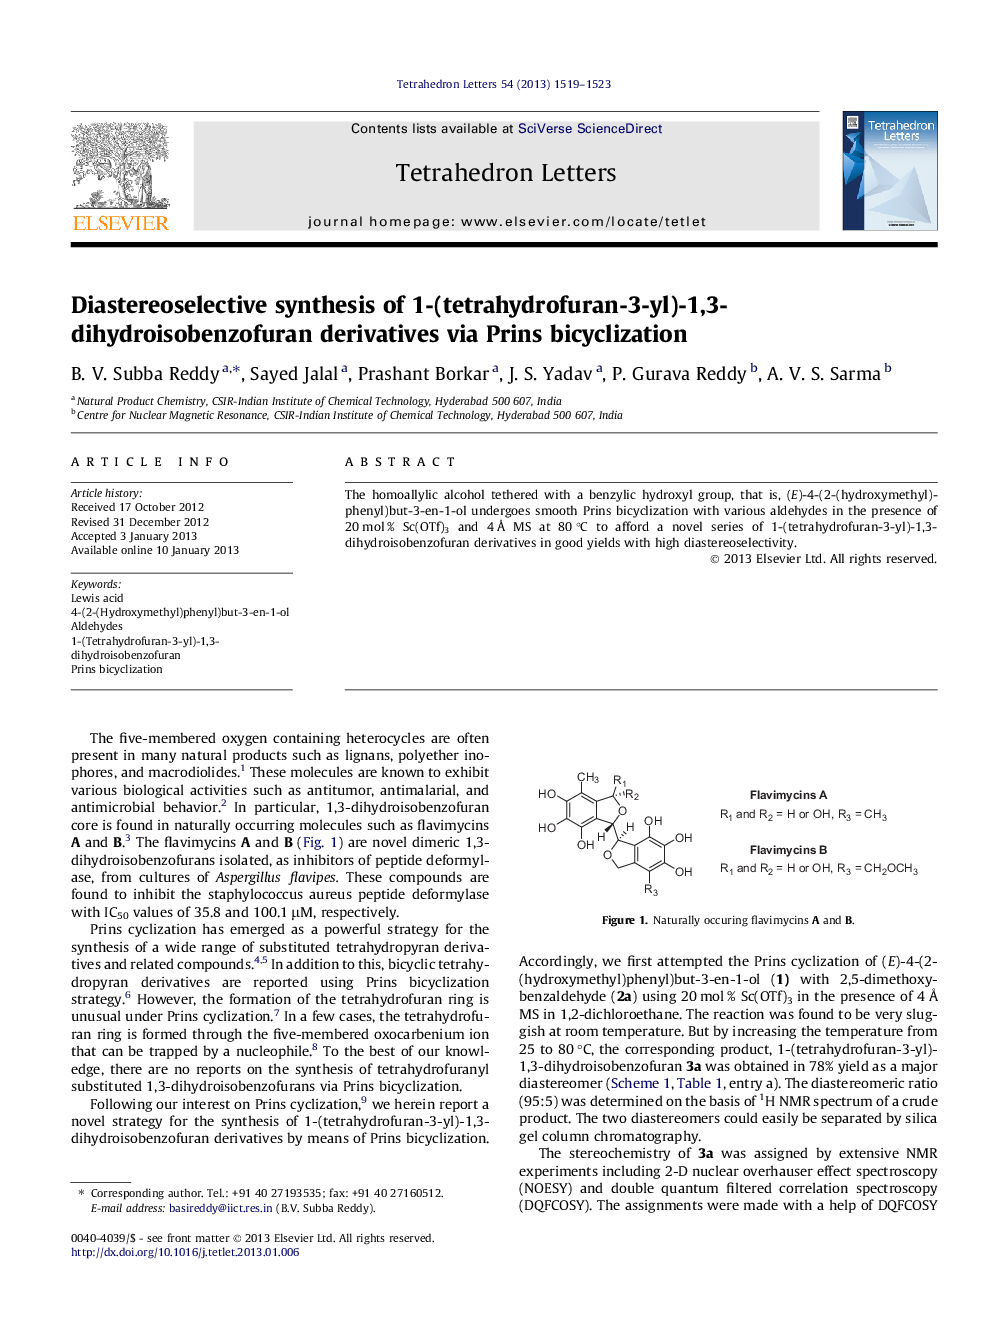 Diastereoselective synthesis of 1-(tetrahydrofuran-3-yl)-1,3-dihydroisobenzofuran derivatives via Prins bicyclization